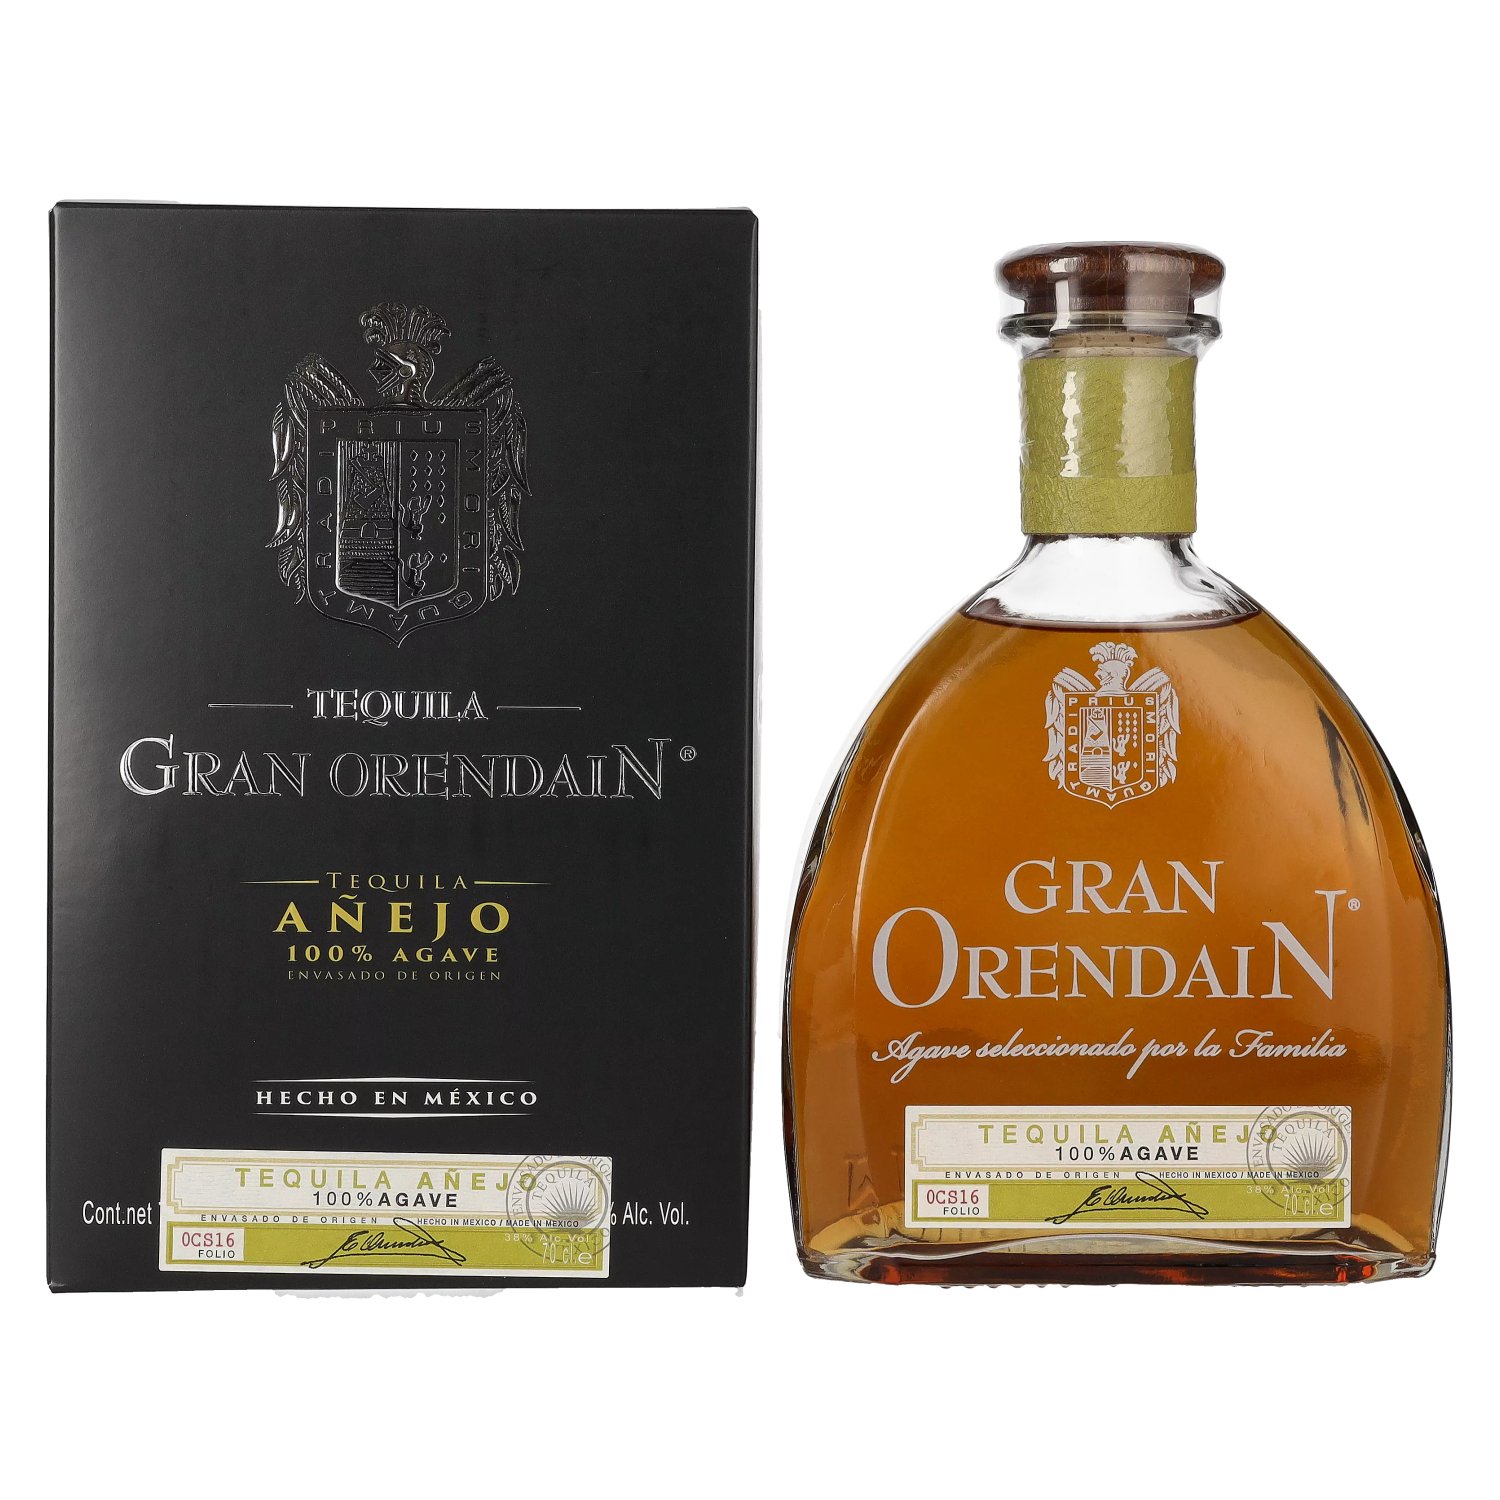 Gran Orendain Tequila Agave 38% in Giftbox 0,7l 100% Vol. AÑEJO